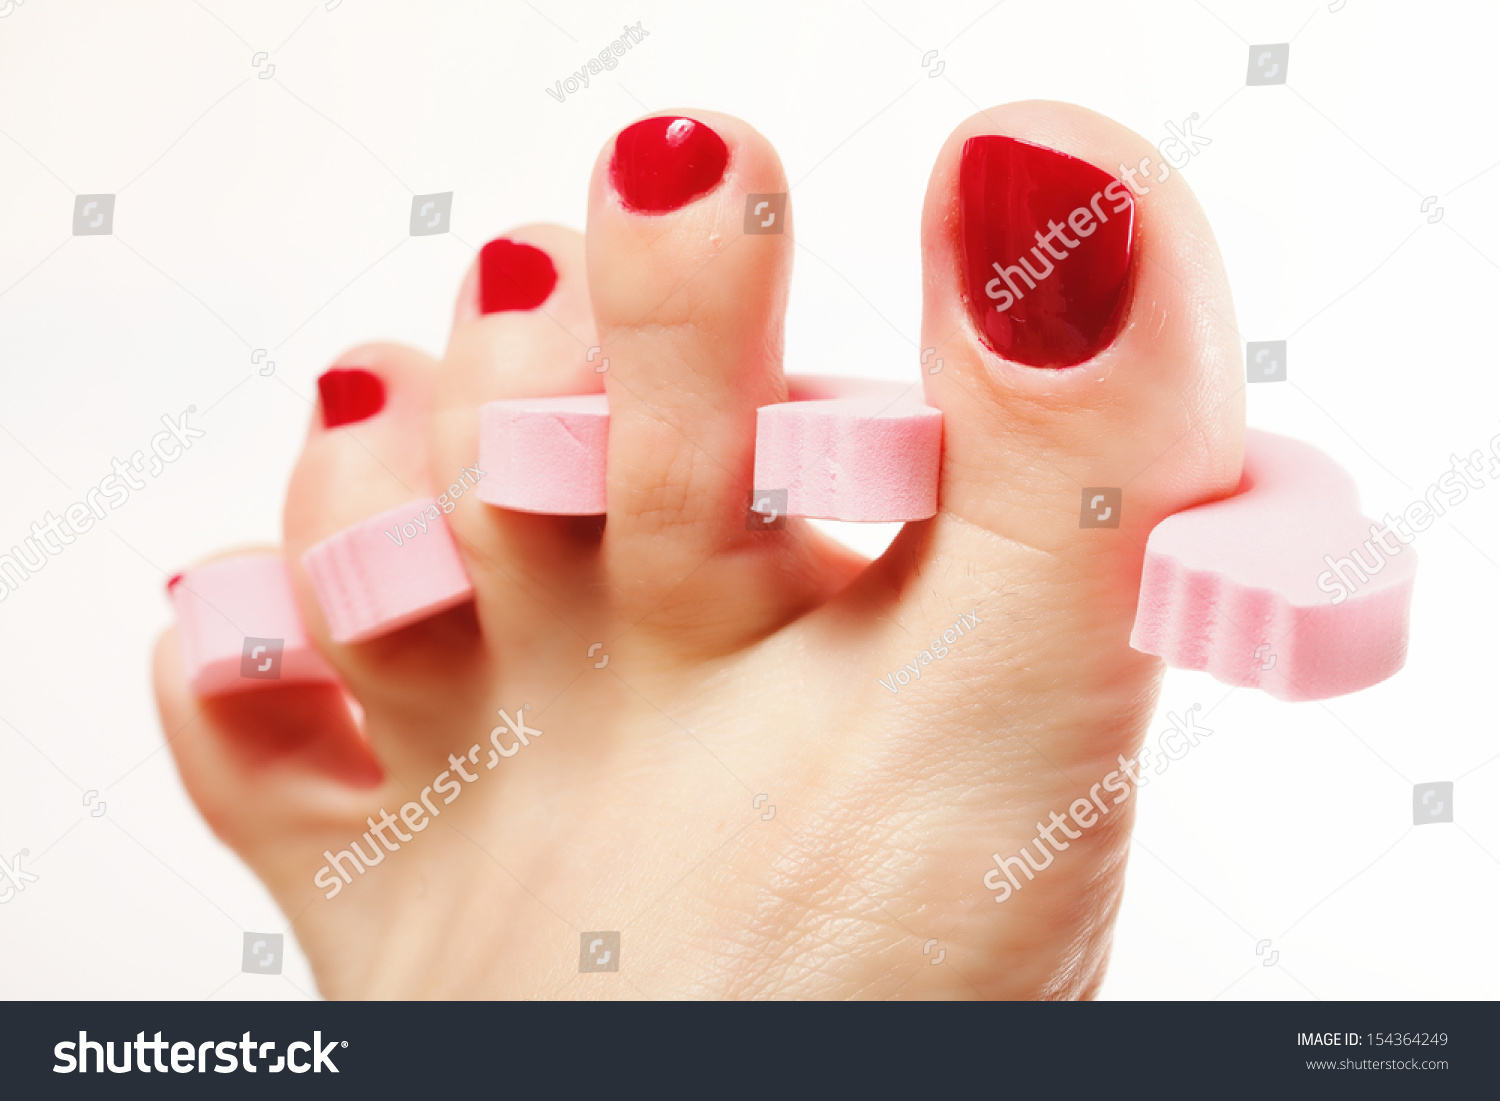 Foot Pedicure Applying Woman'S Feet With Red Toenails In Toe Separators ...